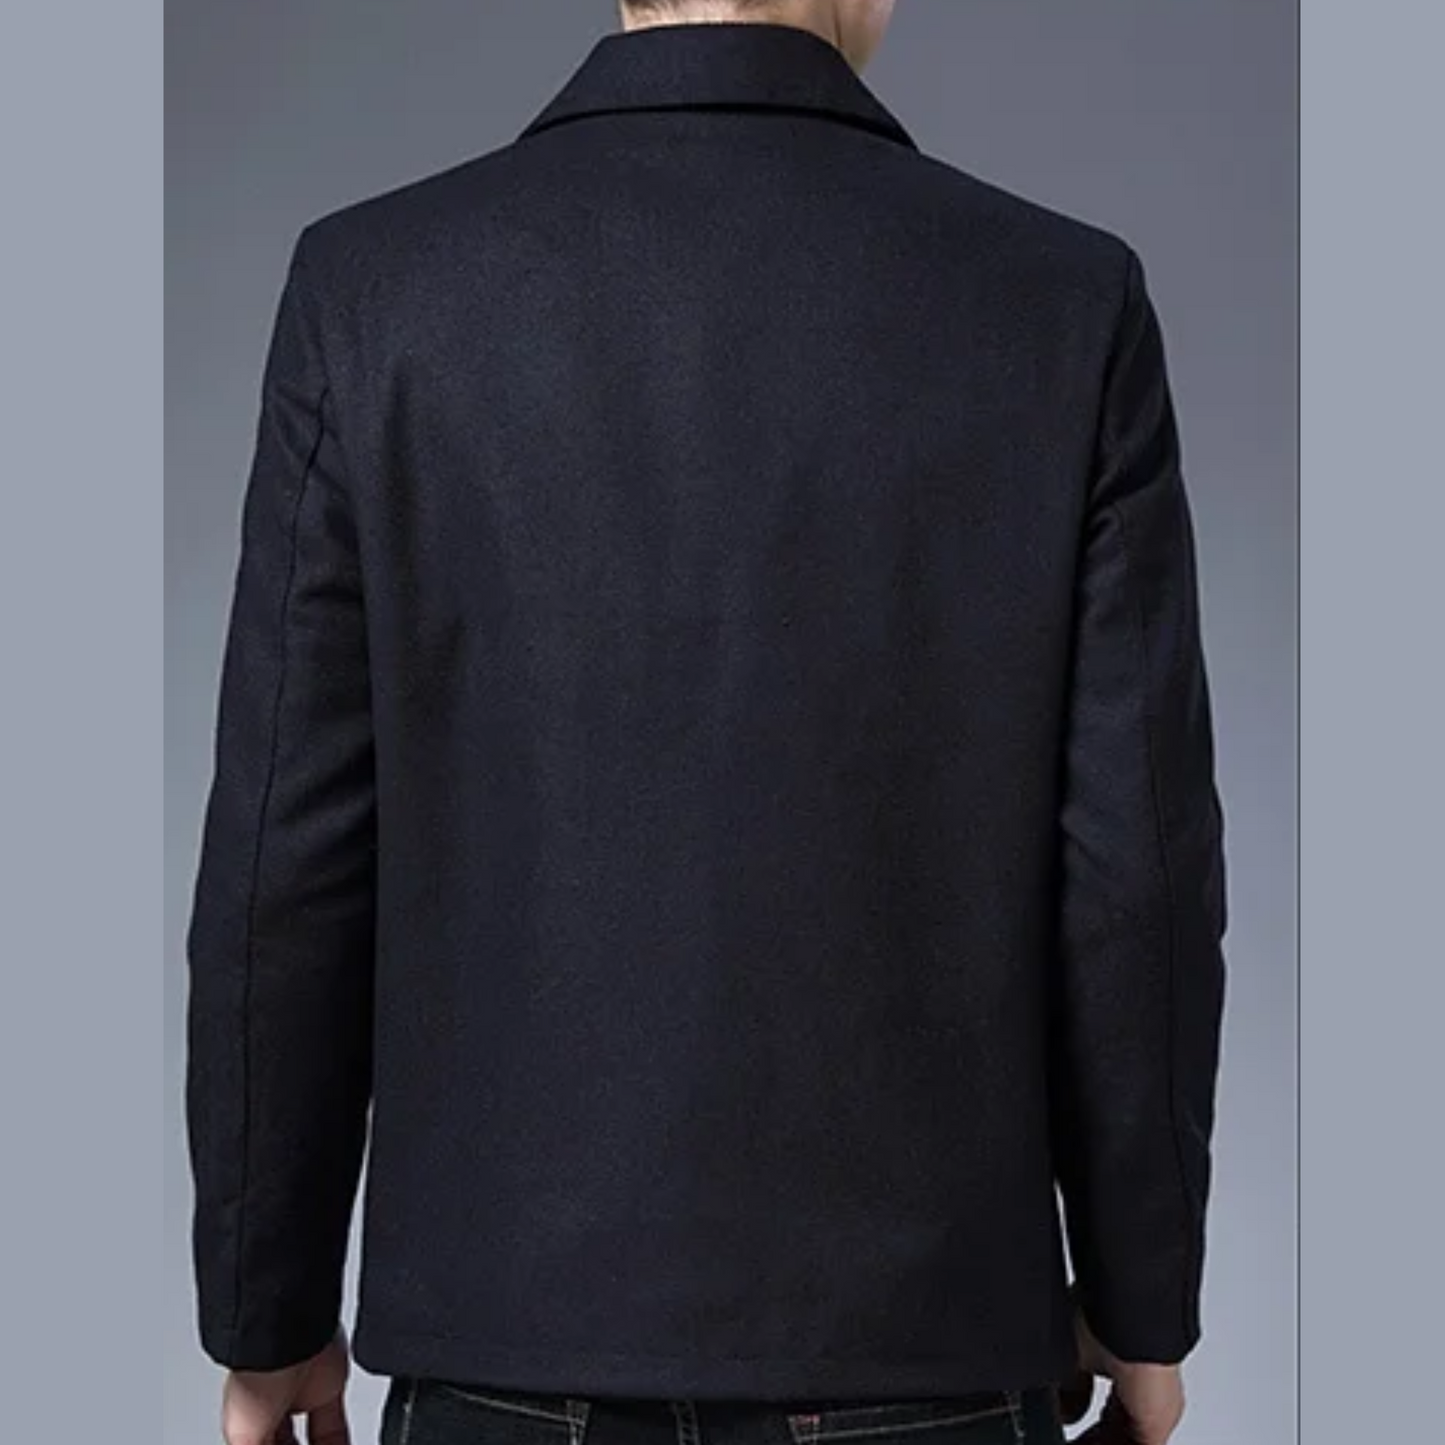 Jermaine - Men's Casual Zipper Jacket